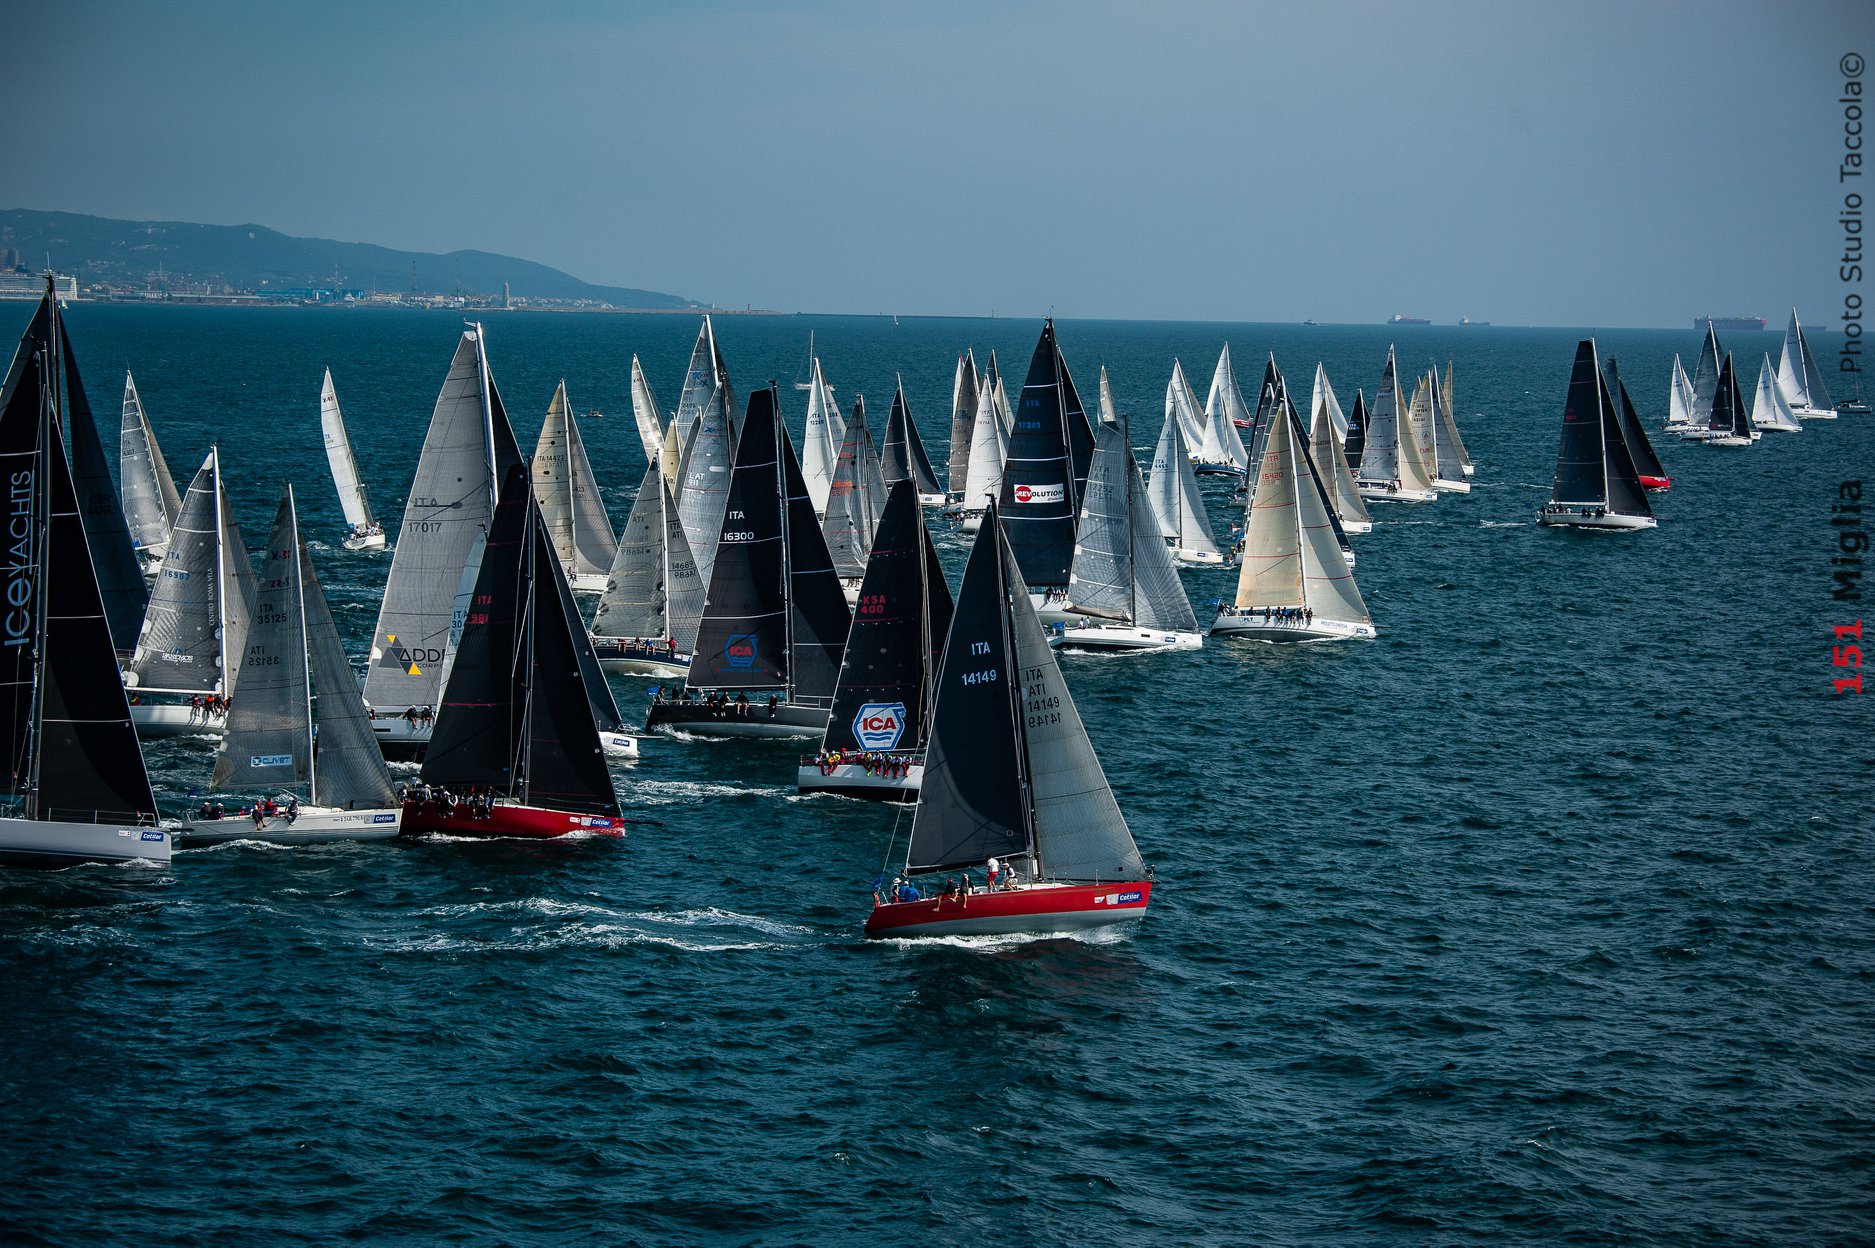 Fair winds to members participating in the 151 Miglia regatta - News - Yacht Club Costa Smeralda